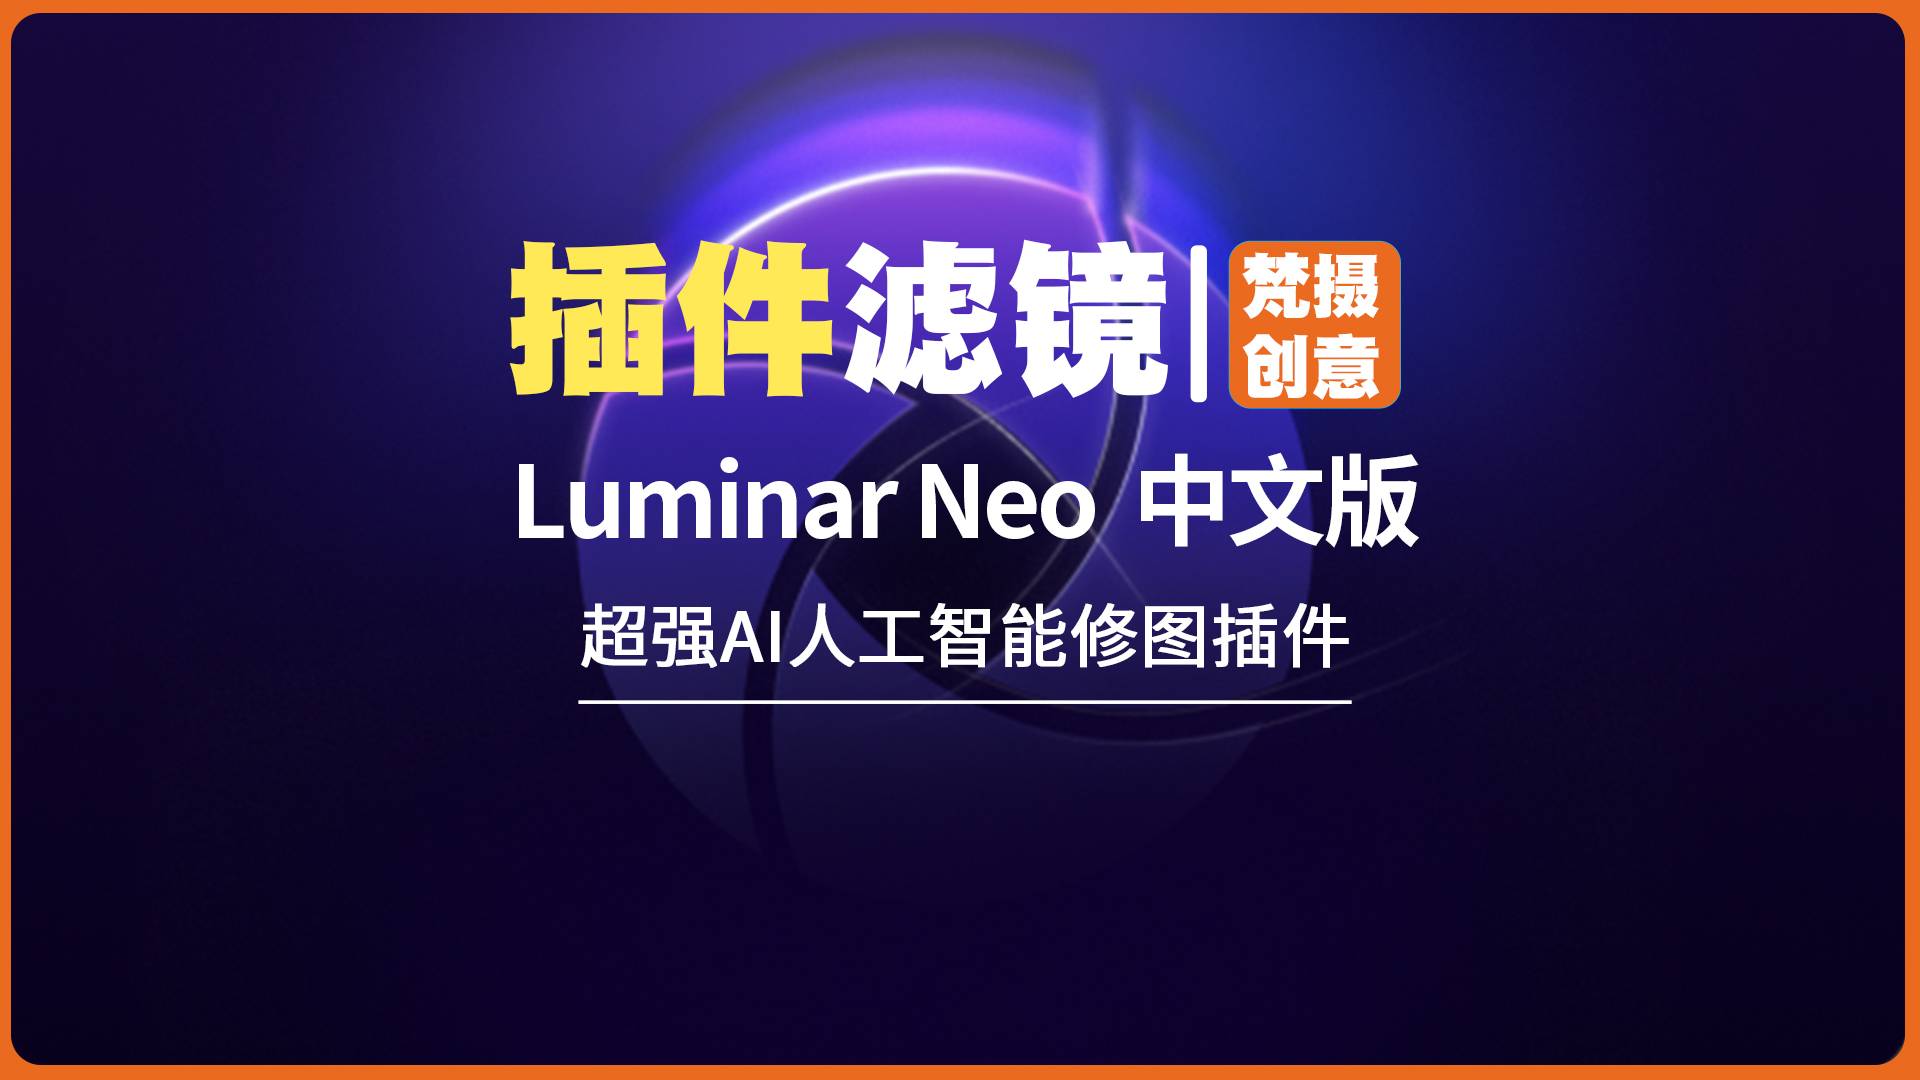 Luminar Neo -WINX64，AI技术助力创意图像编辑！V1.18.2-梵摄创意库